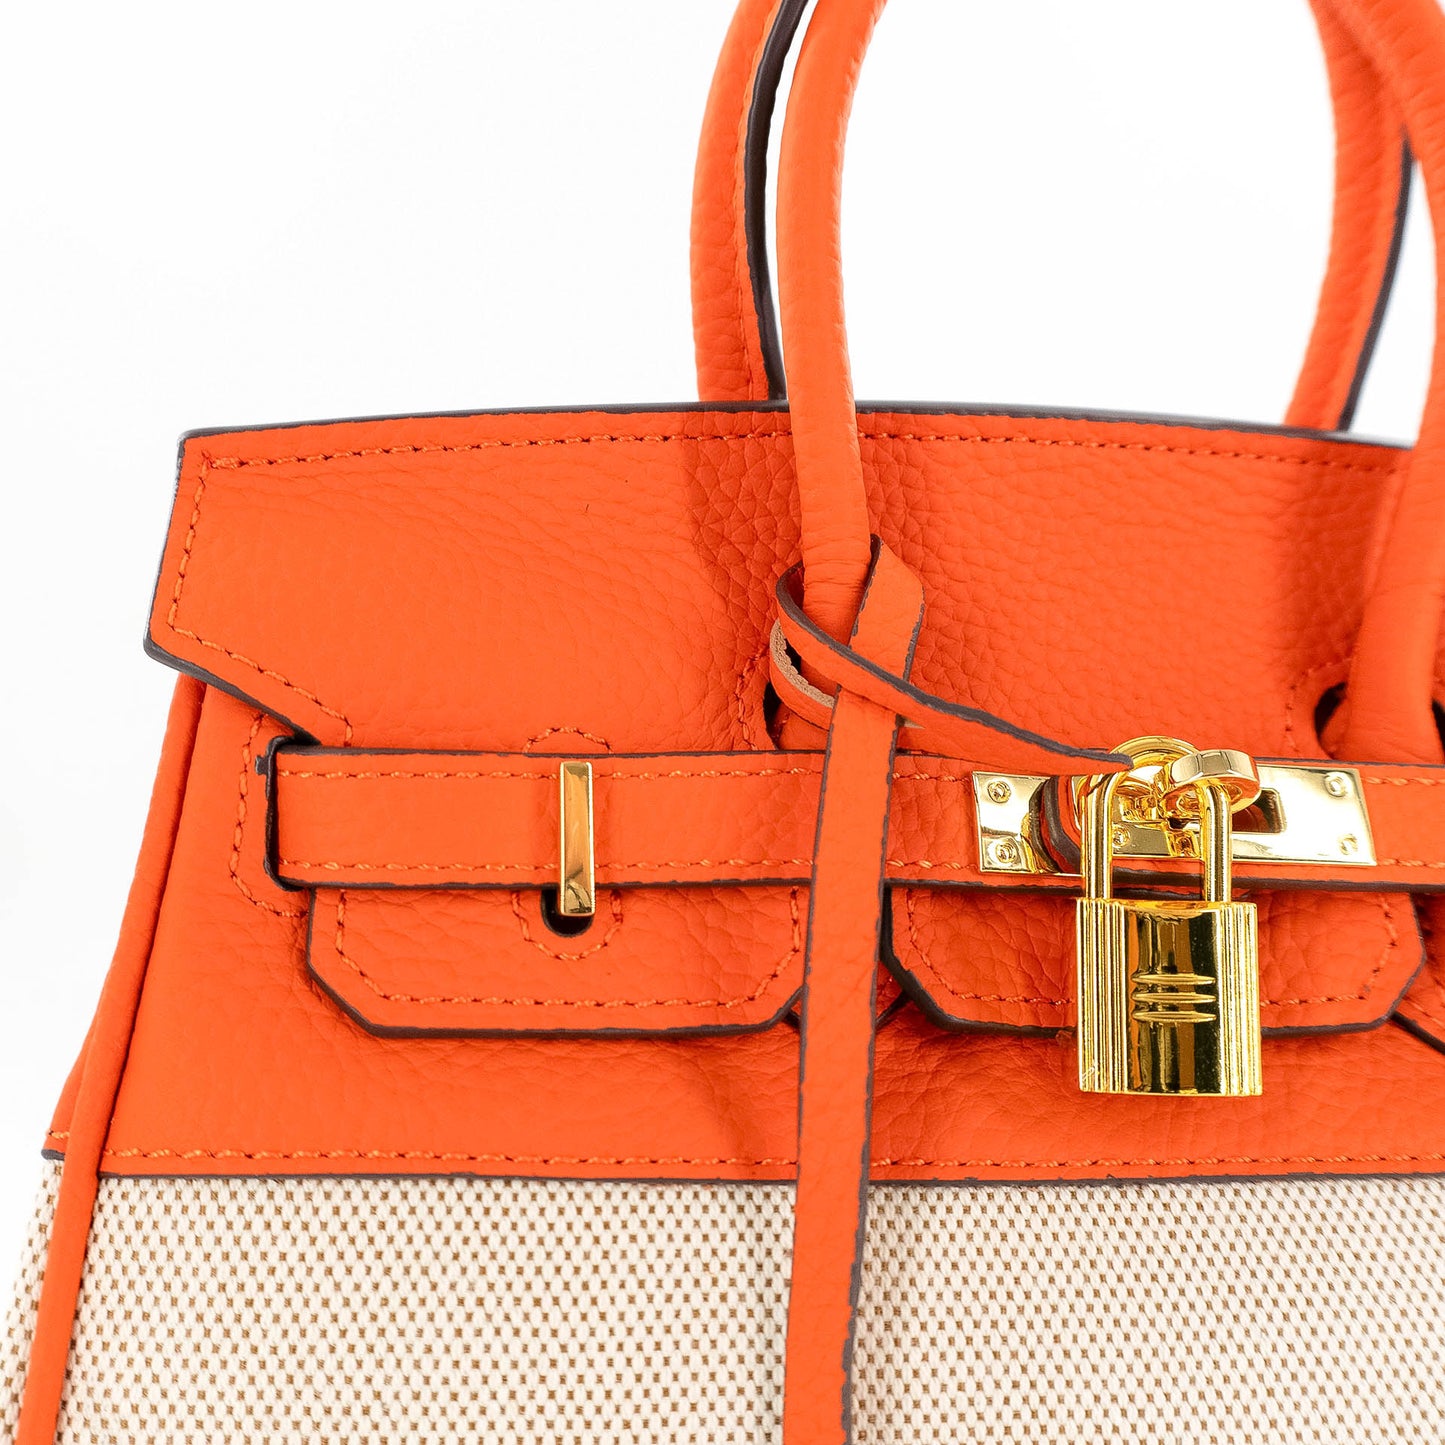 Duchess Handbag in Canvas and Orange Leather